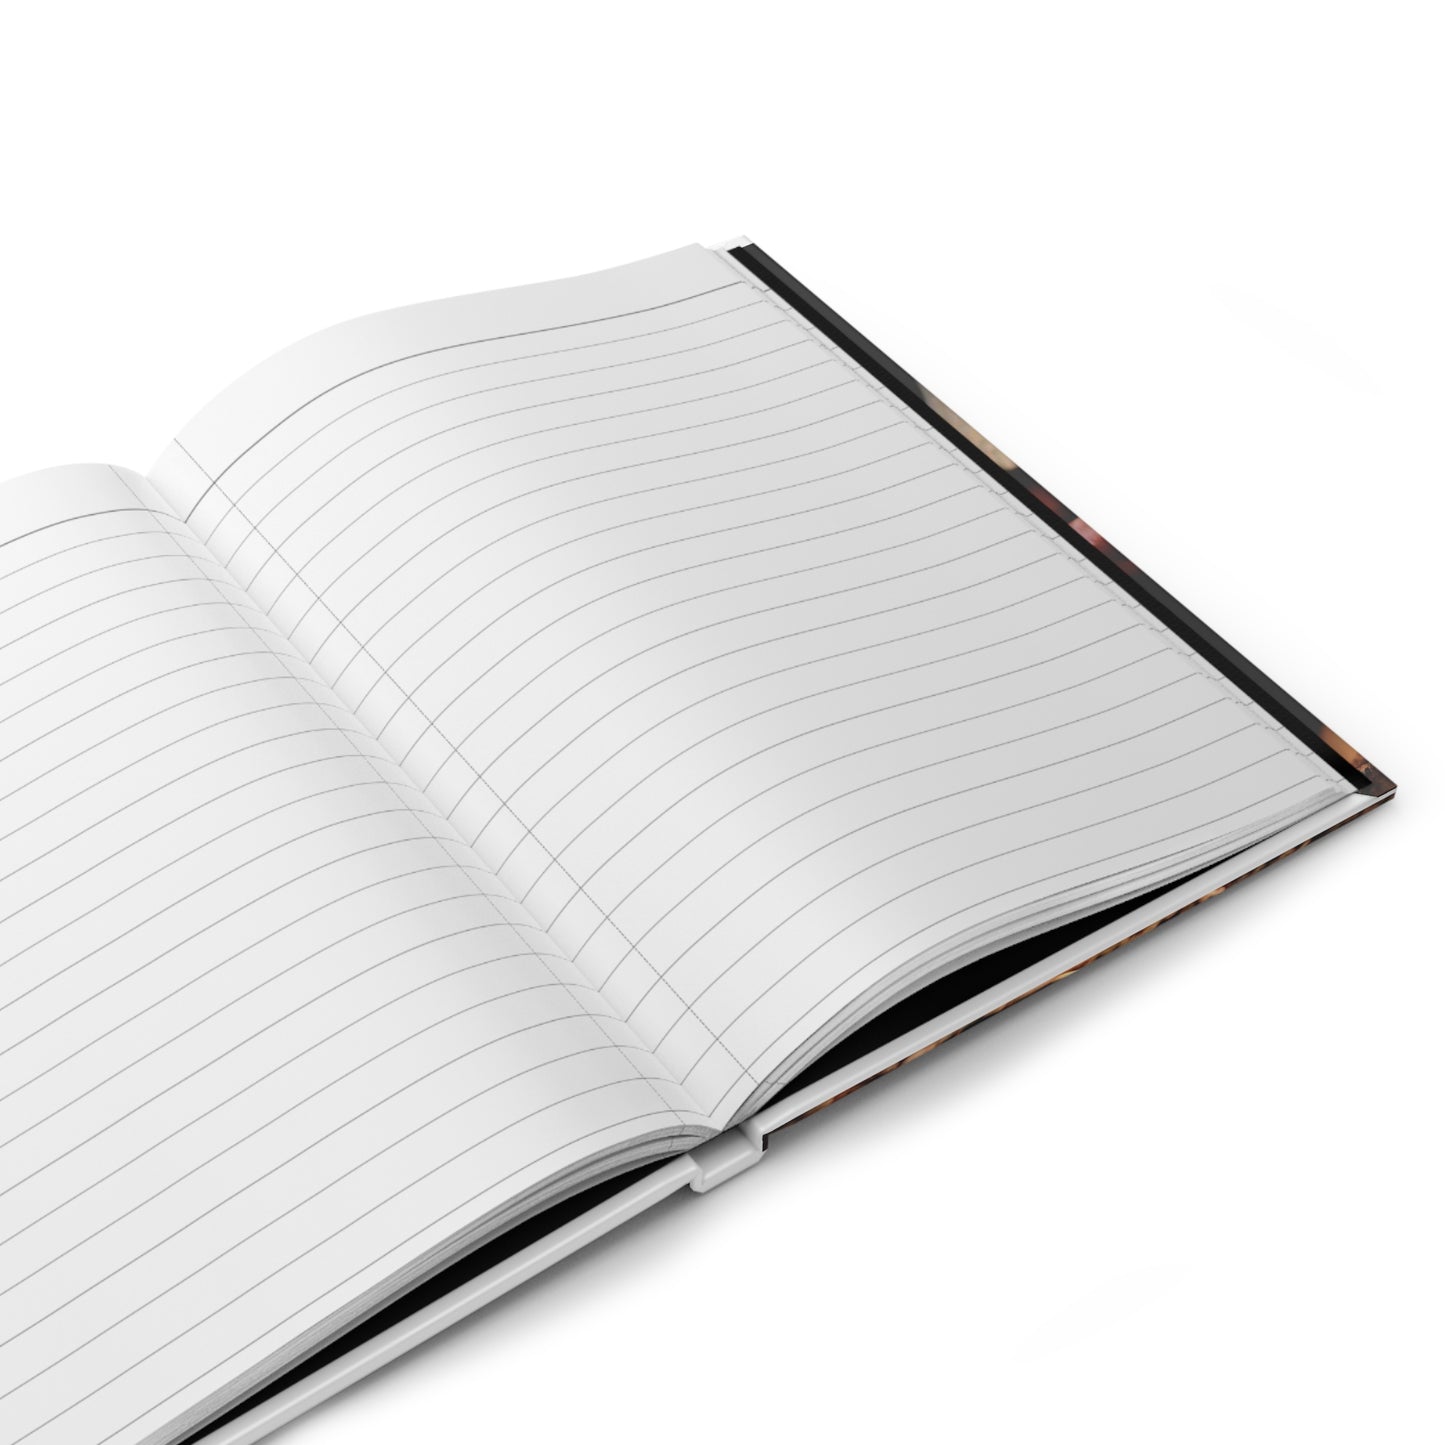 Create Hardcover Journal